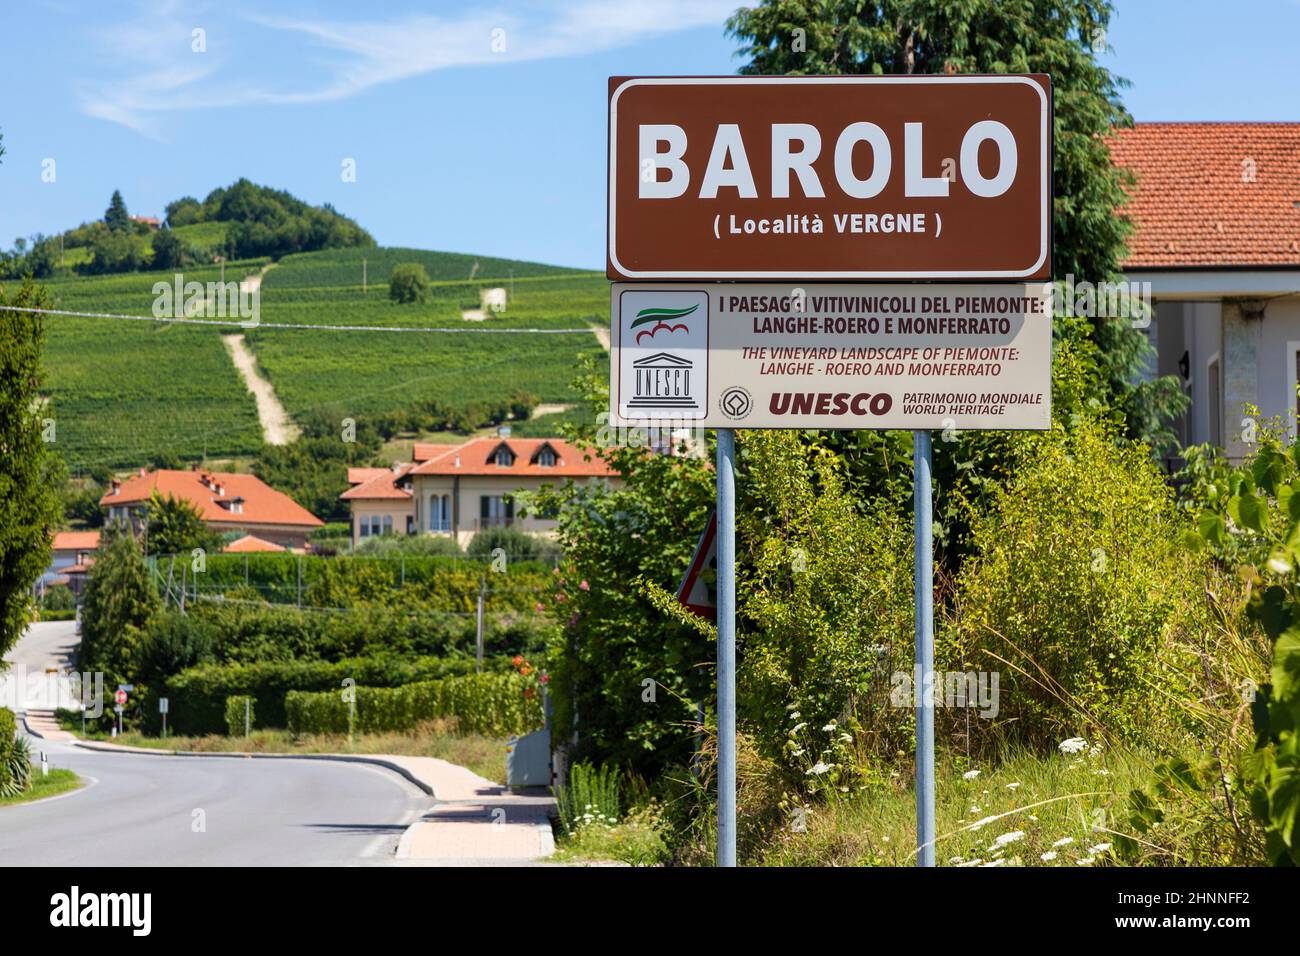 Barolo village road sign, Unesco site, Italy Stock Photo